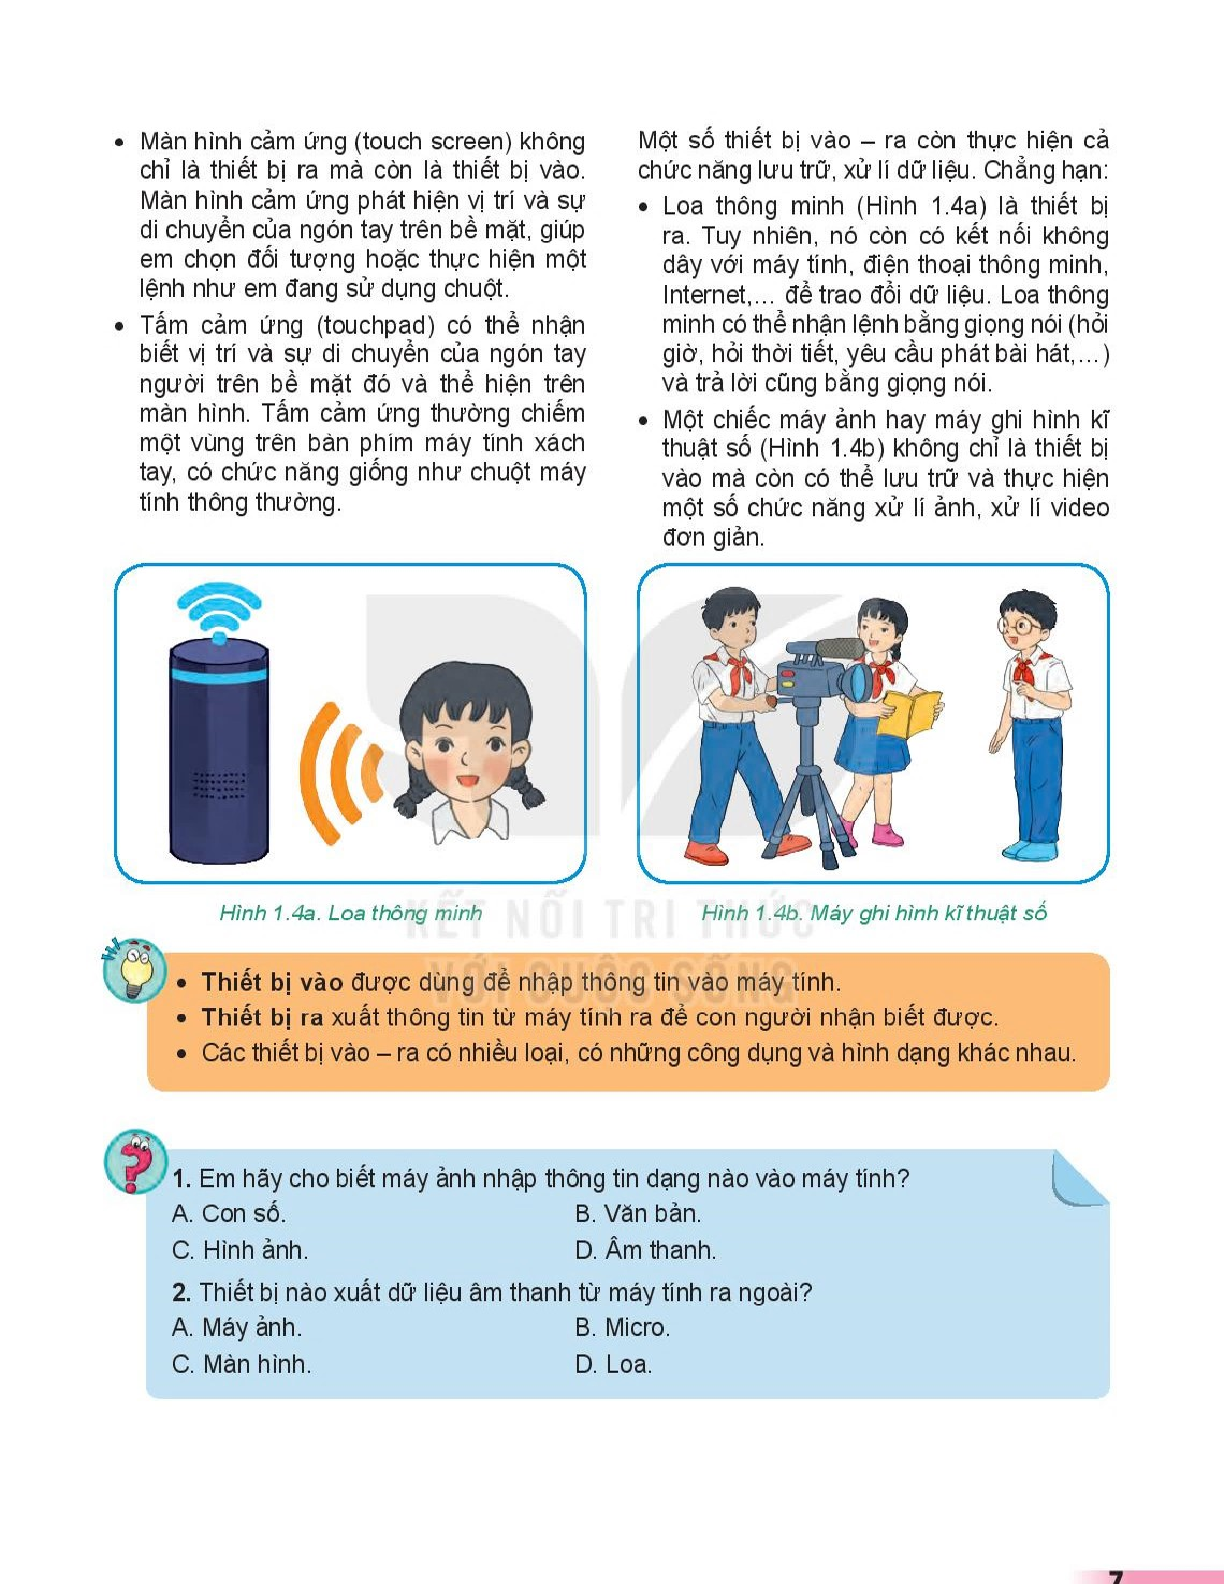 Tin học lớp 7 Kết nối tri thức pdf (trang 8)